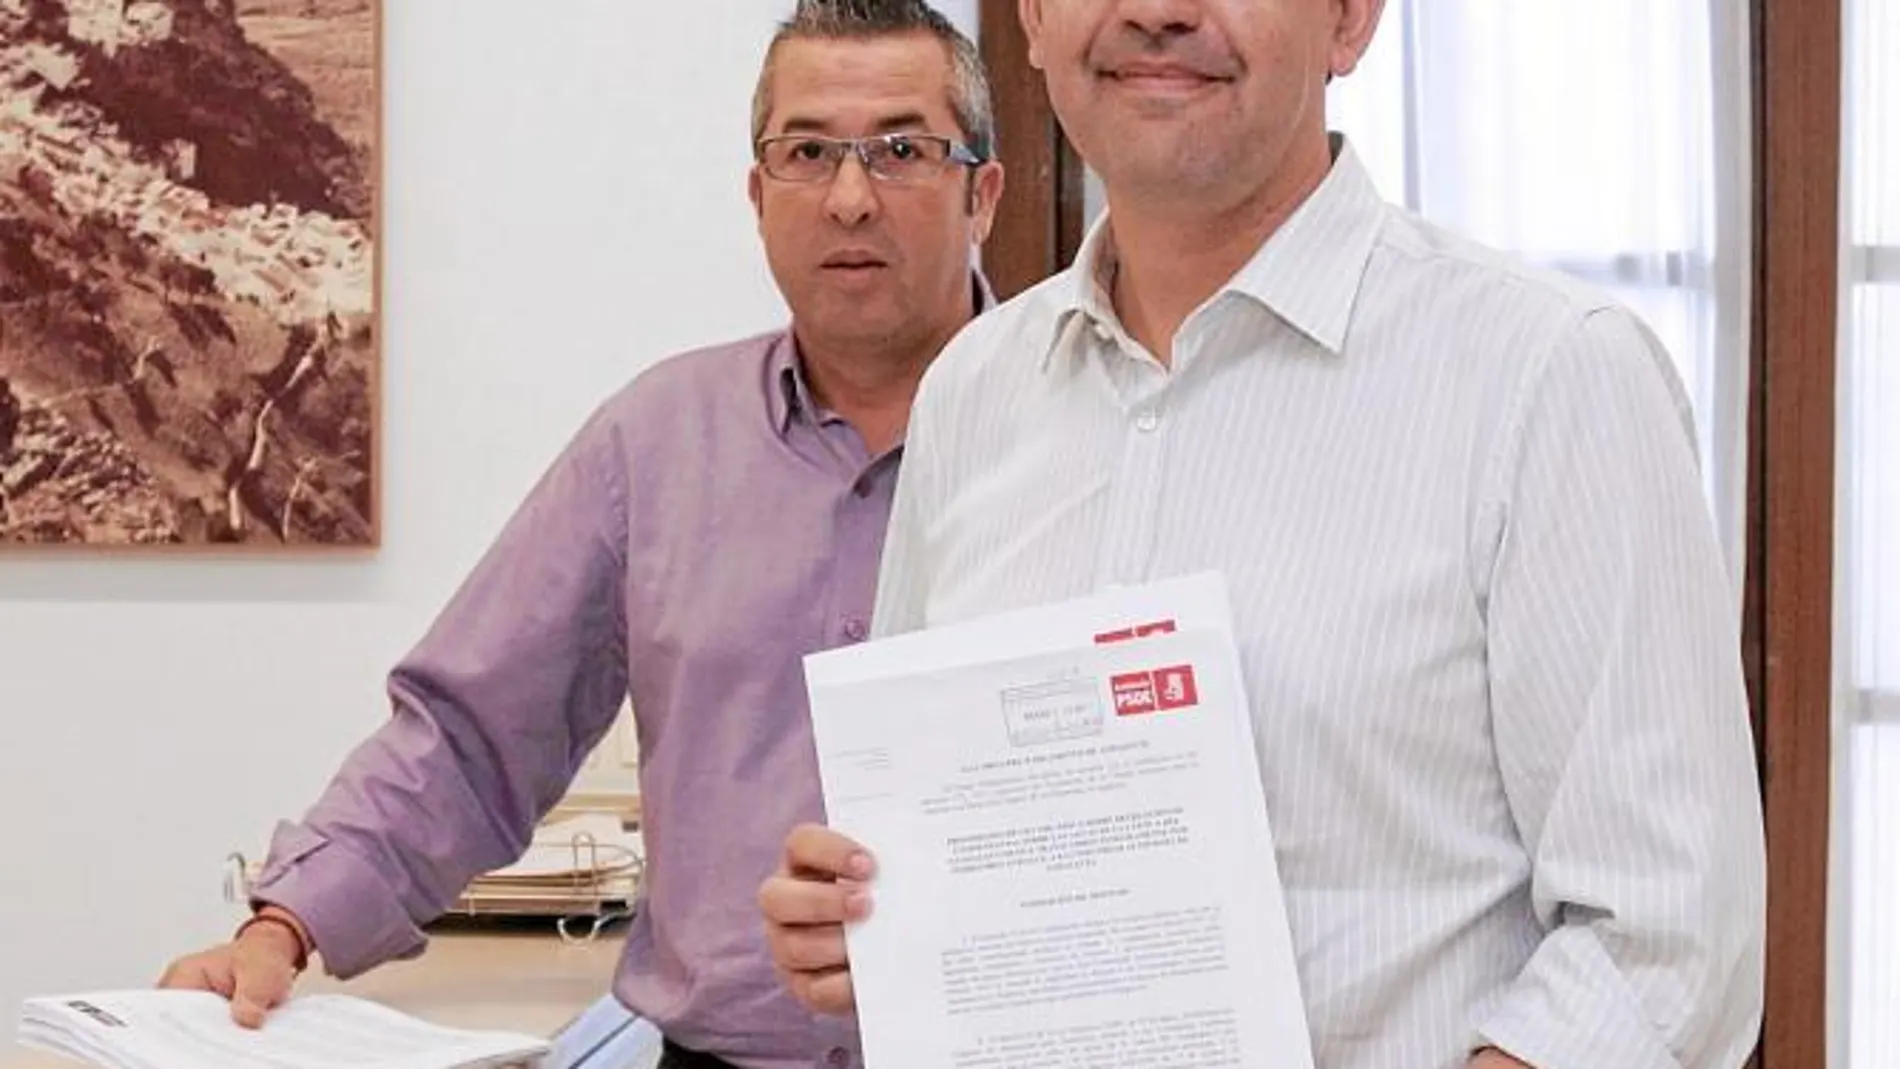 El portavoz del PSOE en el Parlamento, Mario Jiménez, registró ayer la iniciativa legislativa